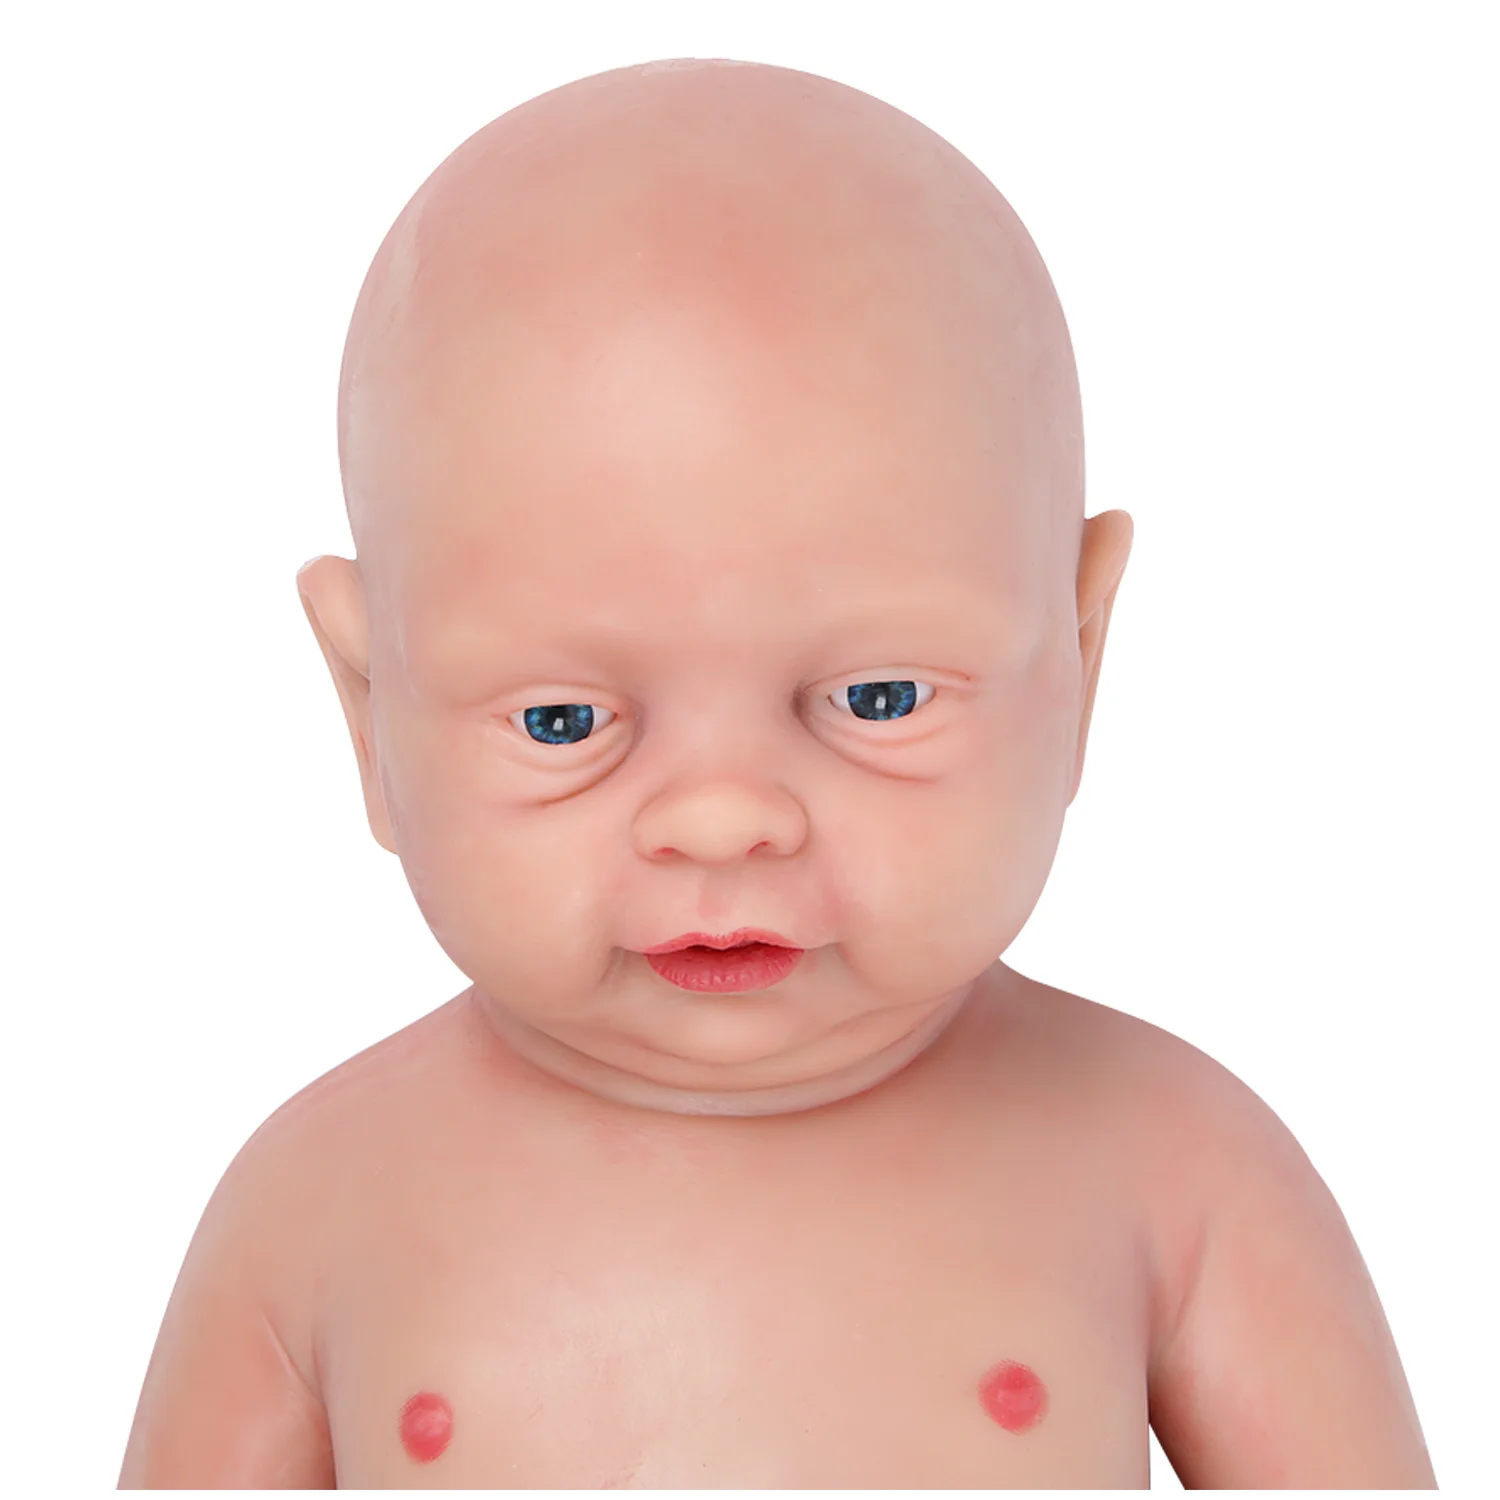 IVITA Realistic Reborn Baby Boy Doll Lifelike Baby Toy FULL BODY SILICONE 